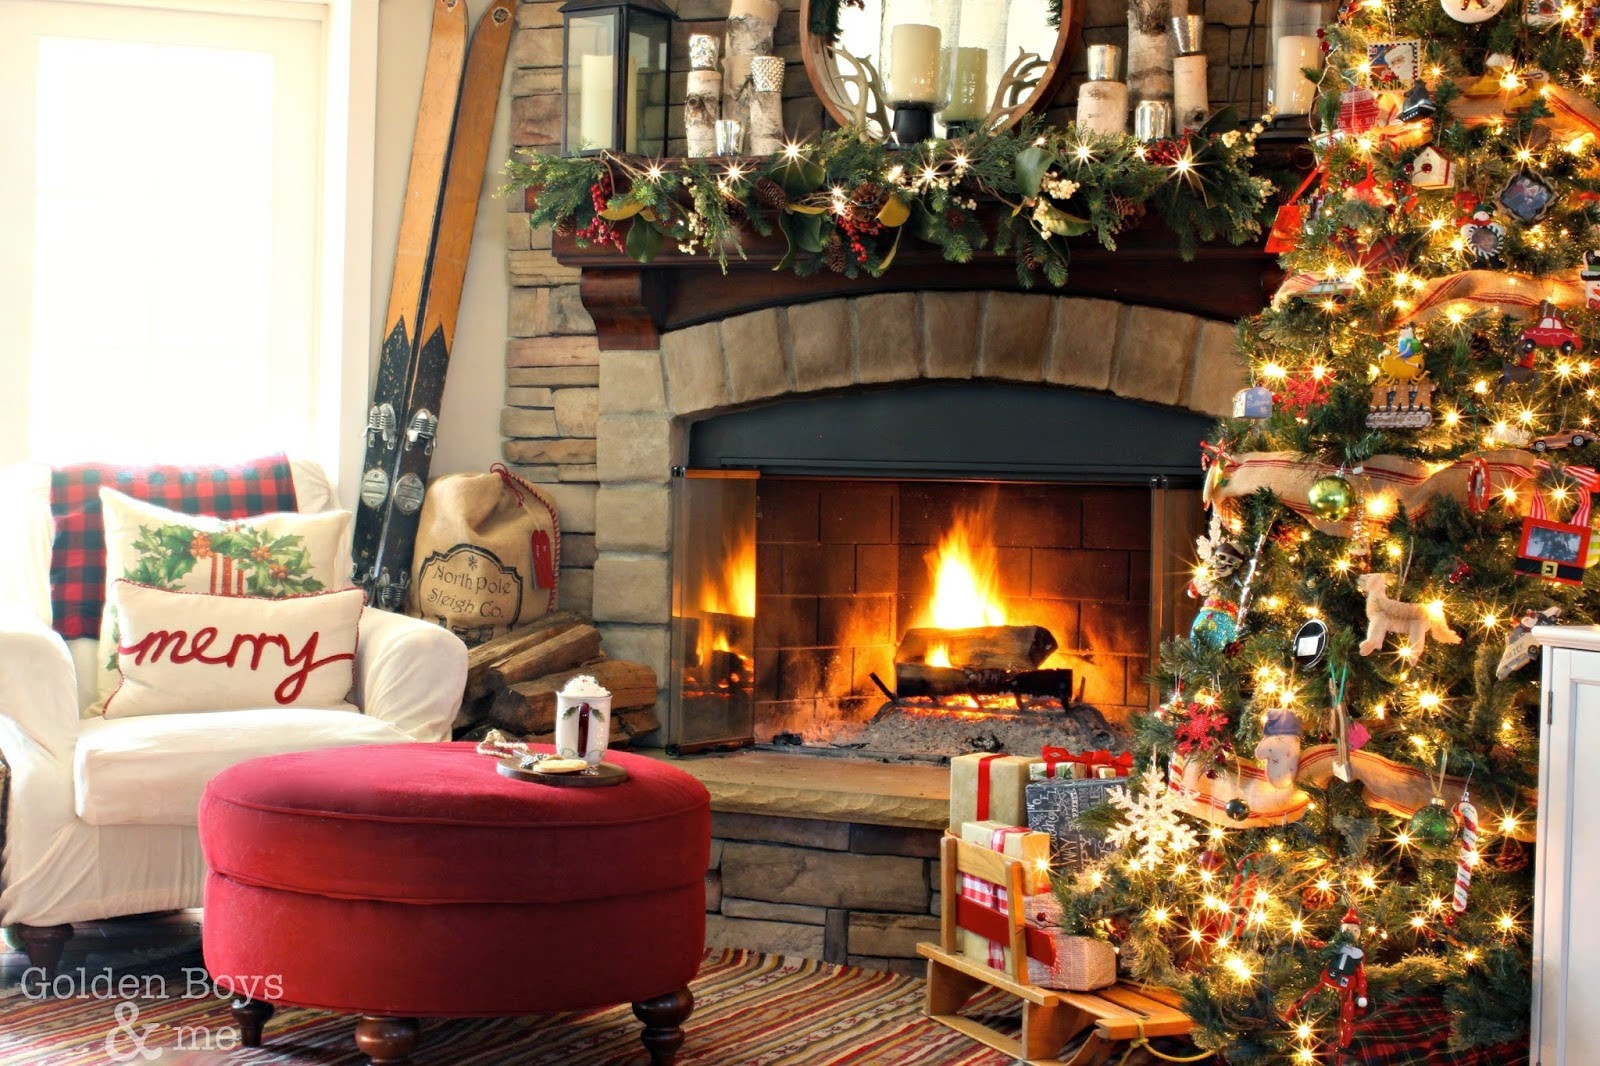 Christmas Fireplace Pics
 Golden Boys and Me Holiday Home Tour 2014